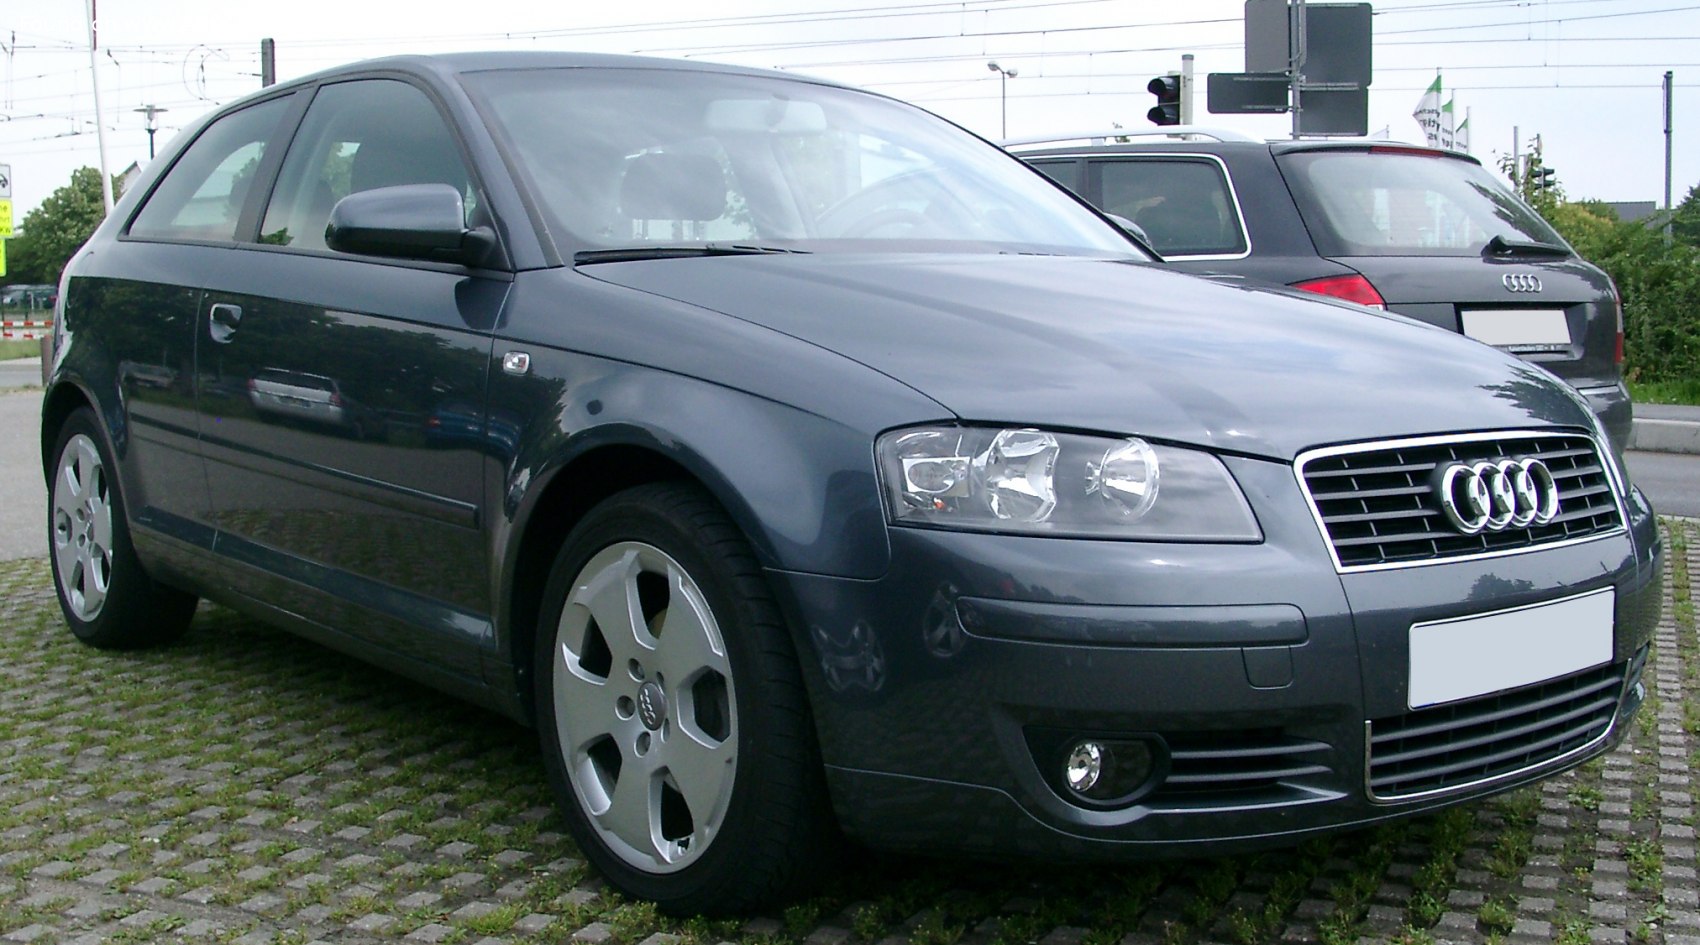 2003 Audi A3 (8P) 3.2 V6 (250 Hp) quattro